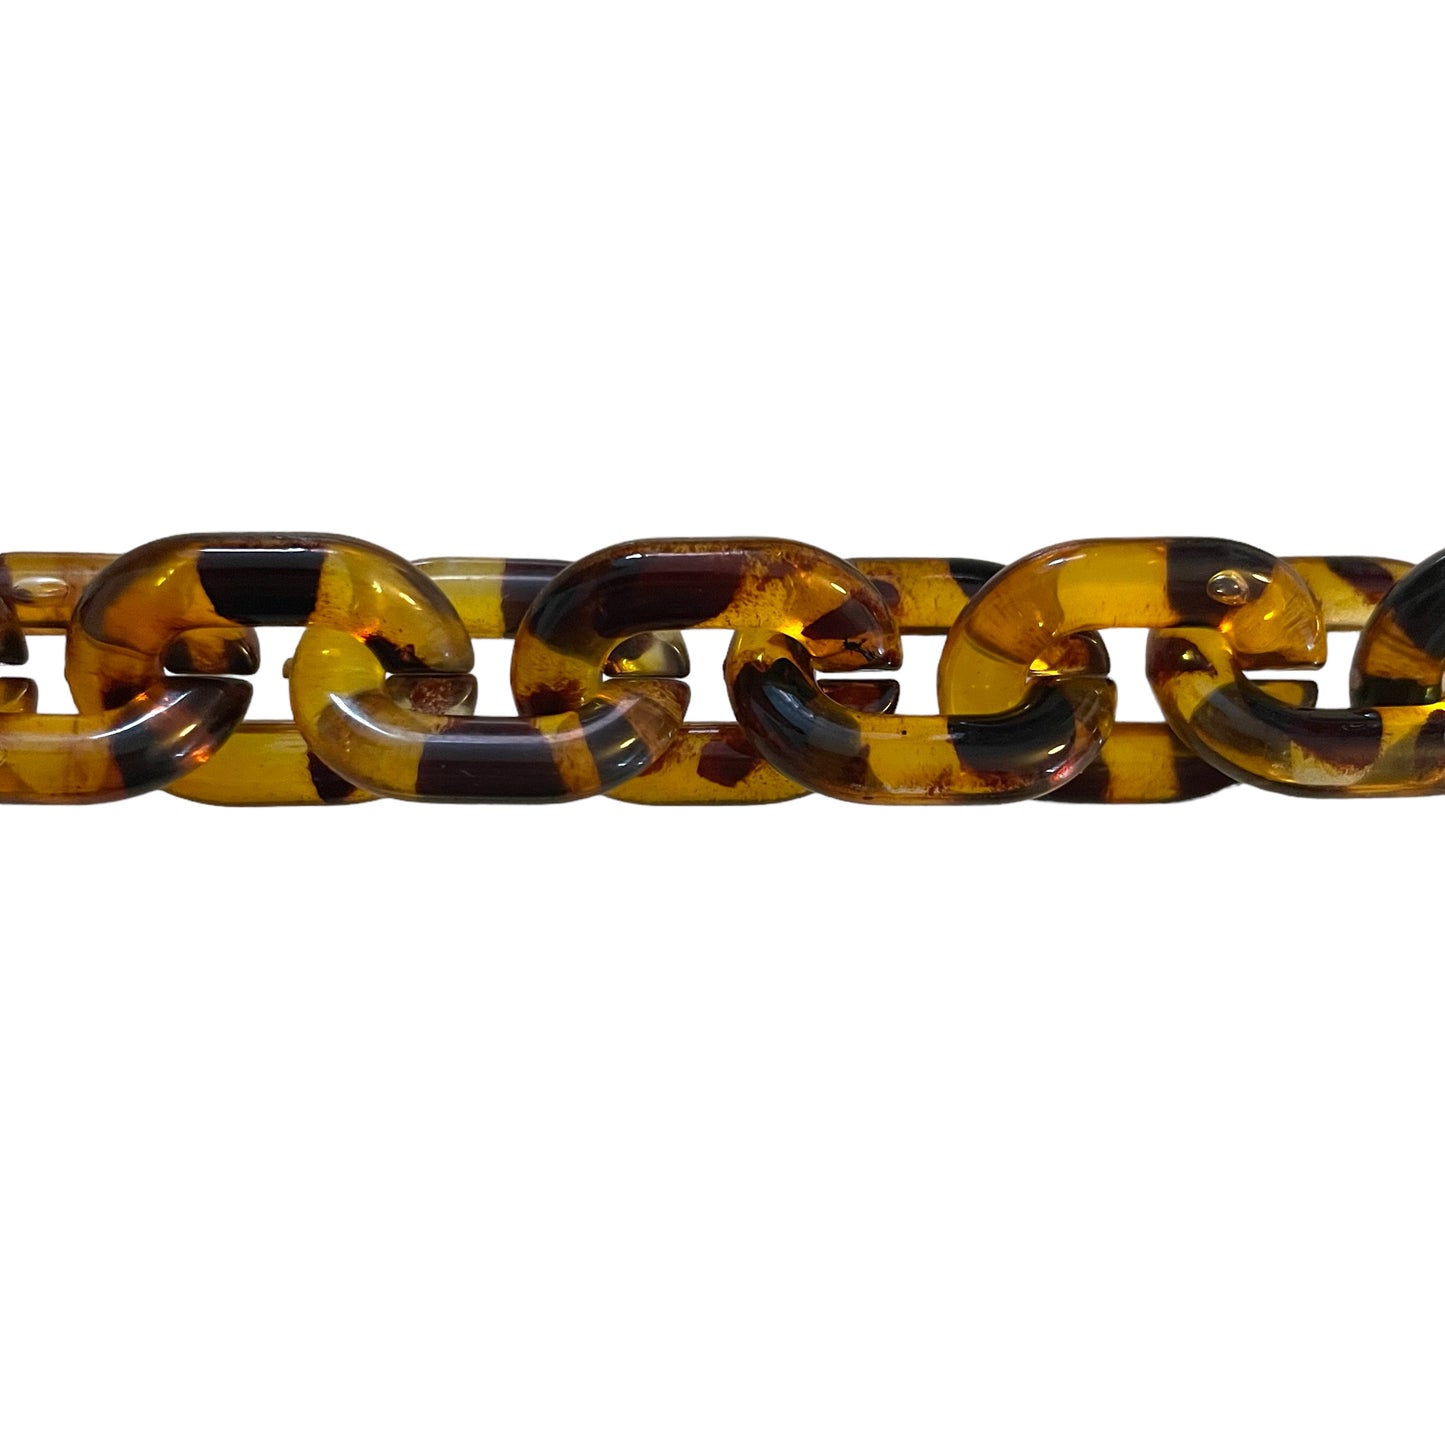 Lara  -Recycled Plastic Glasses / Sunglasses Chain - Tortoiseshell